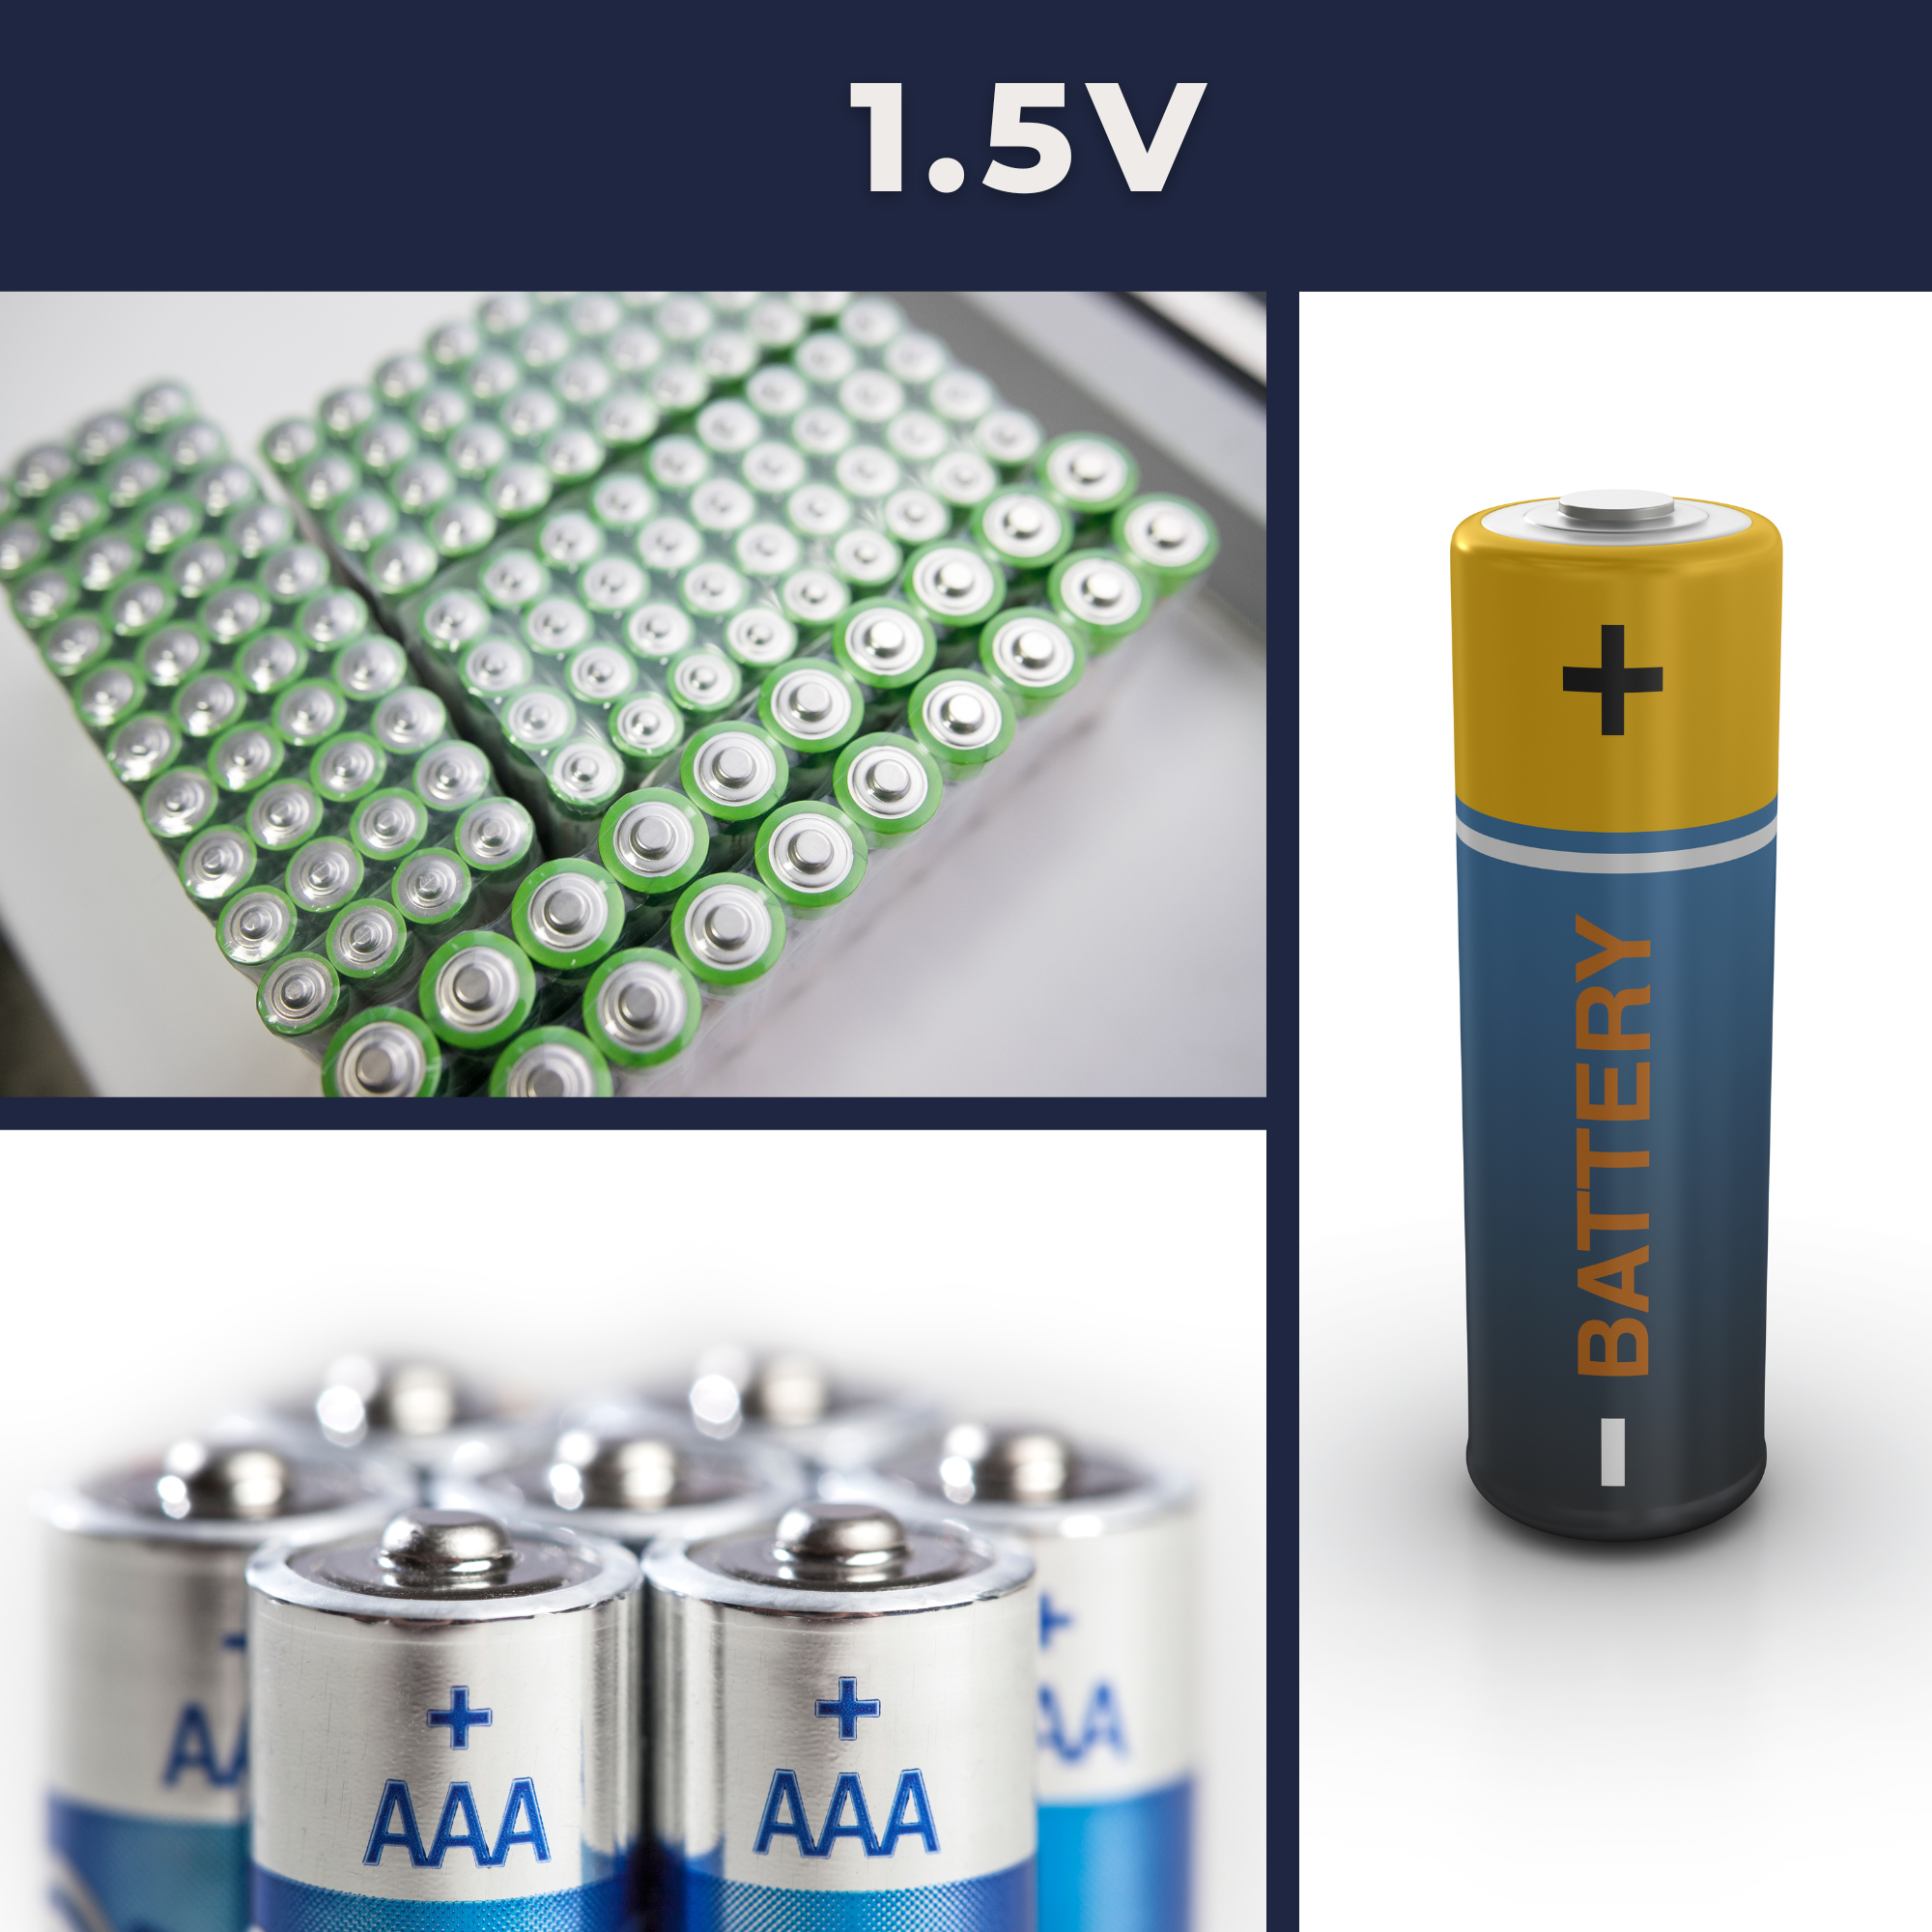 9 Volt Batteries Contain 6 AAAA Batteries